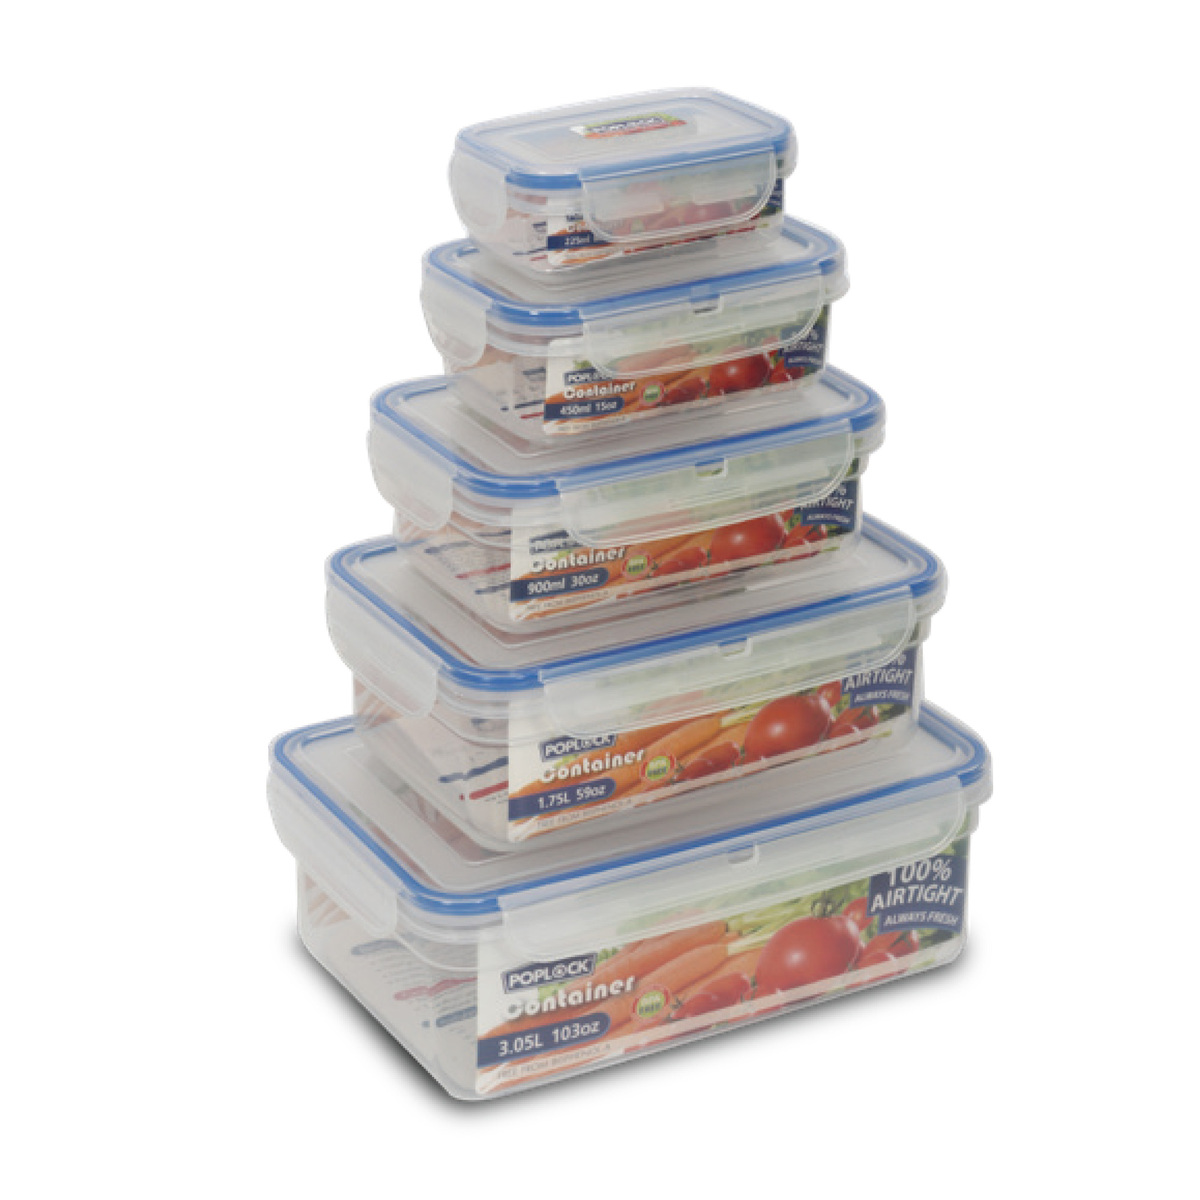 Poplock Food Container 5pcs Set 9121-25